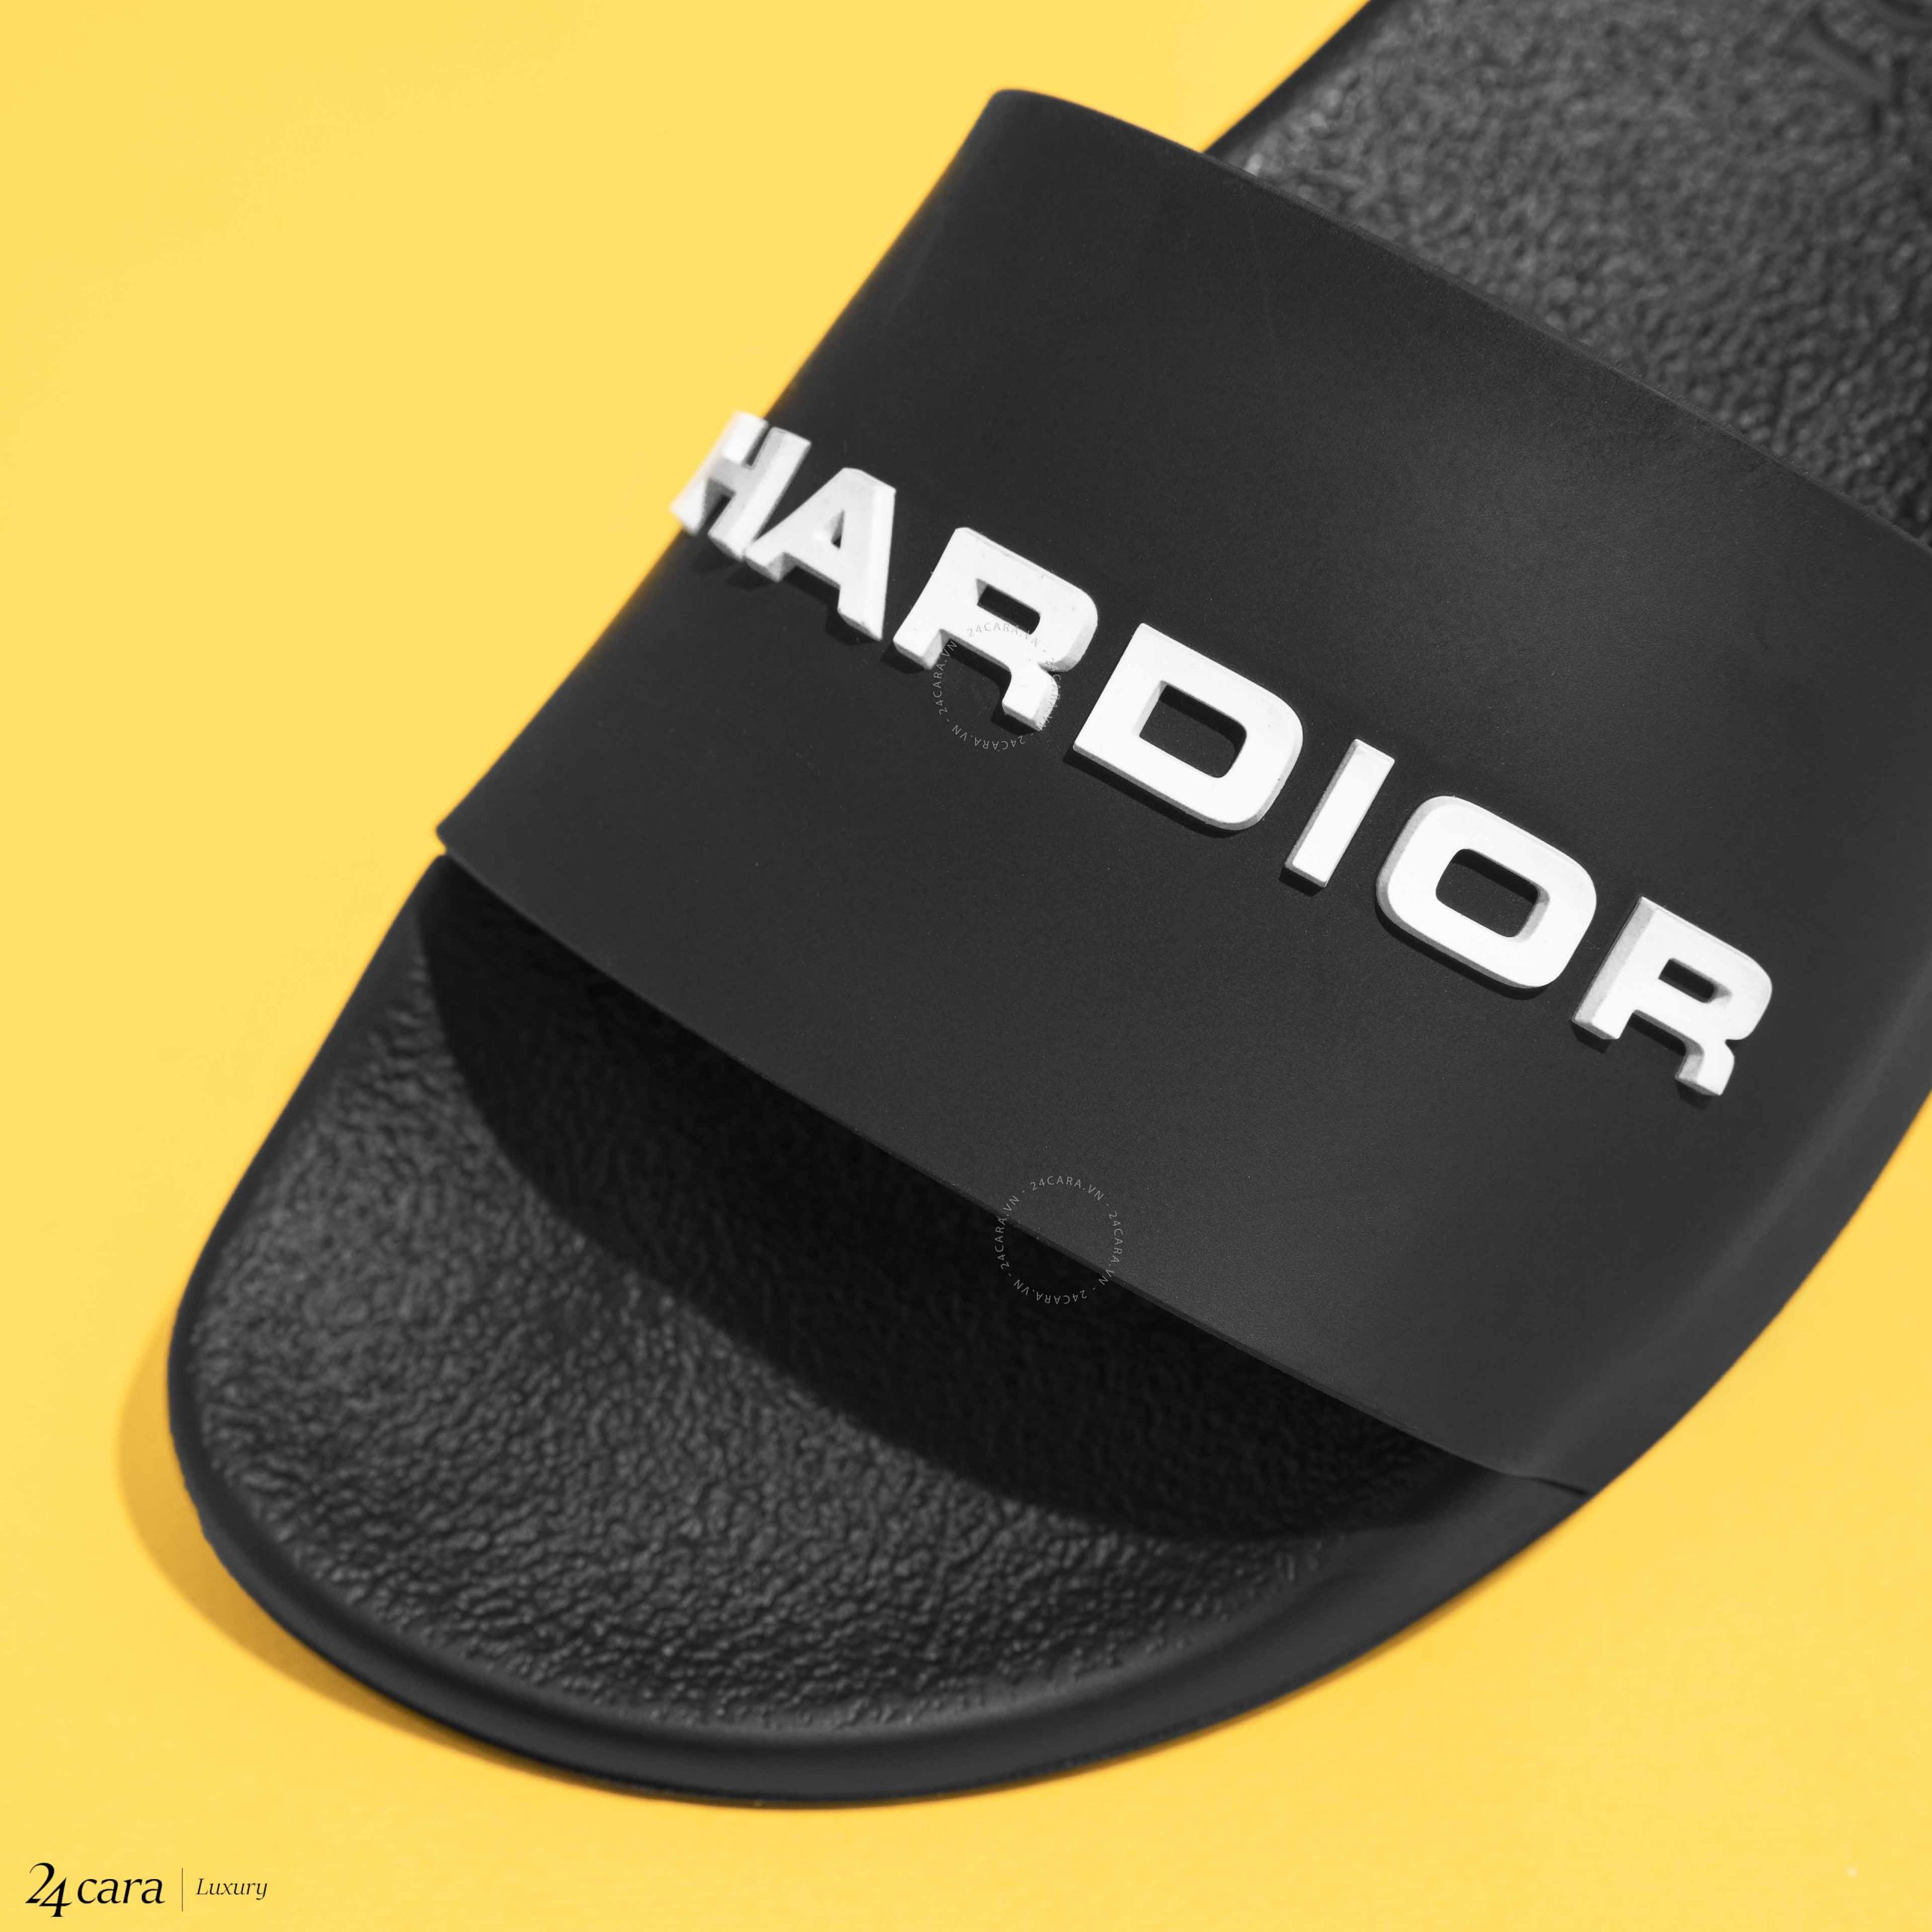 hardior slides